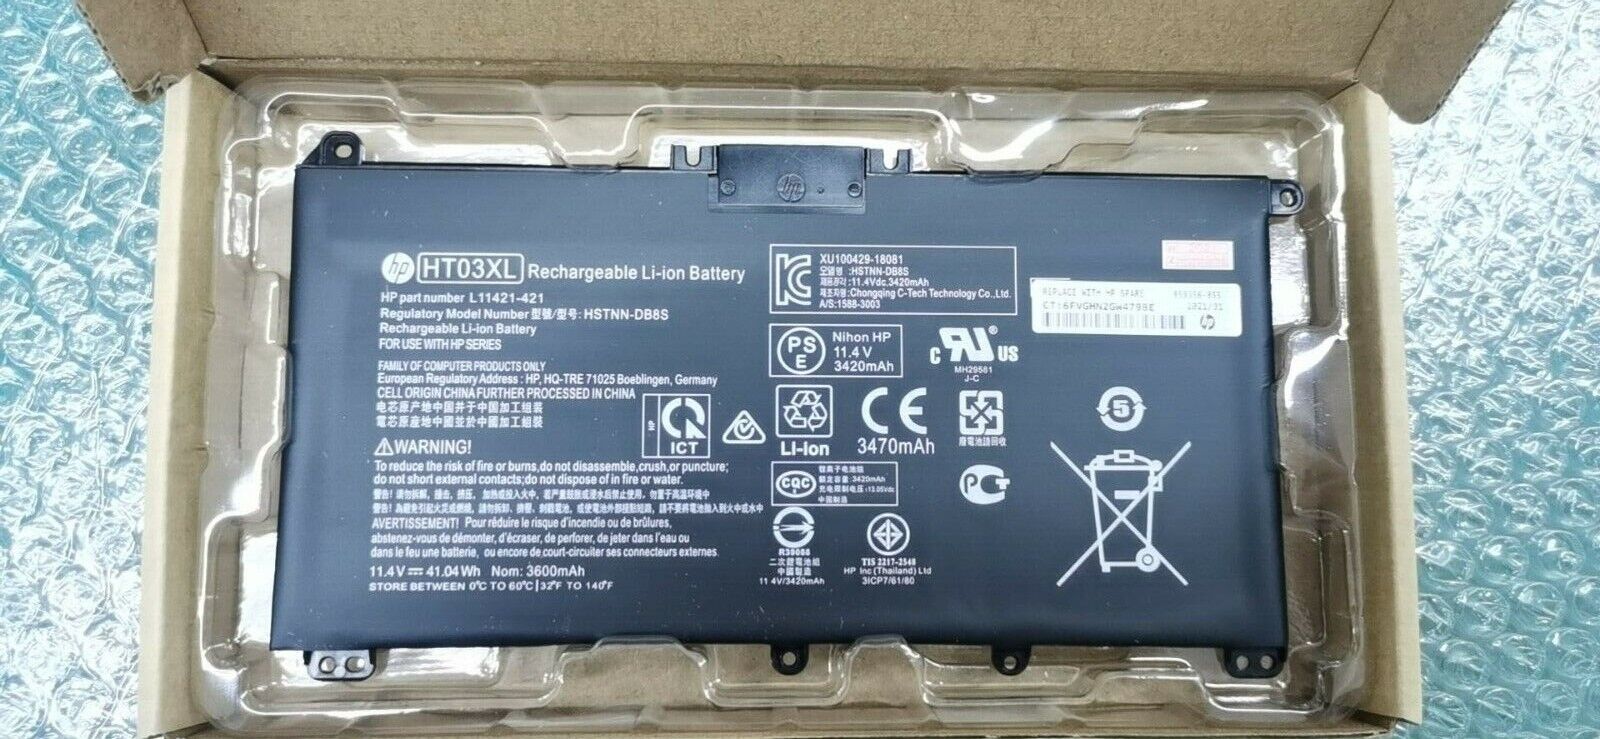 NEW Genuine HT03XL Battery for HP Pavilion L11421-2C2 L11119-855 15-CS 15-DA 